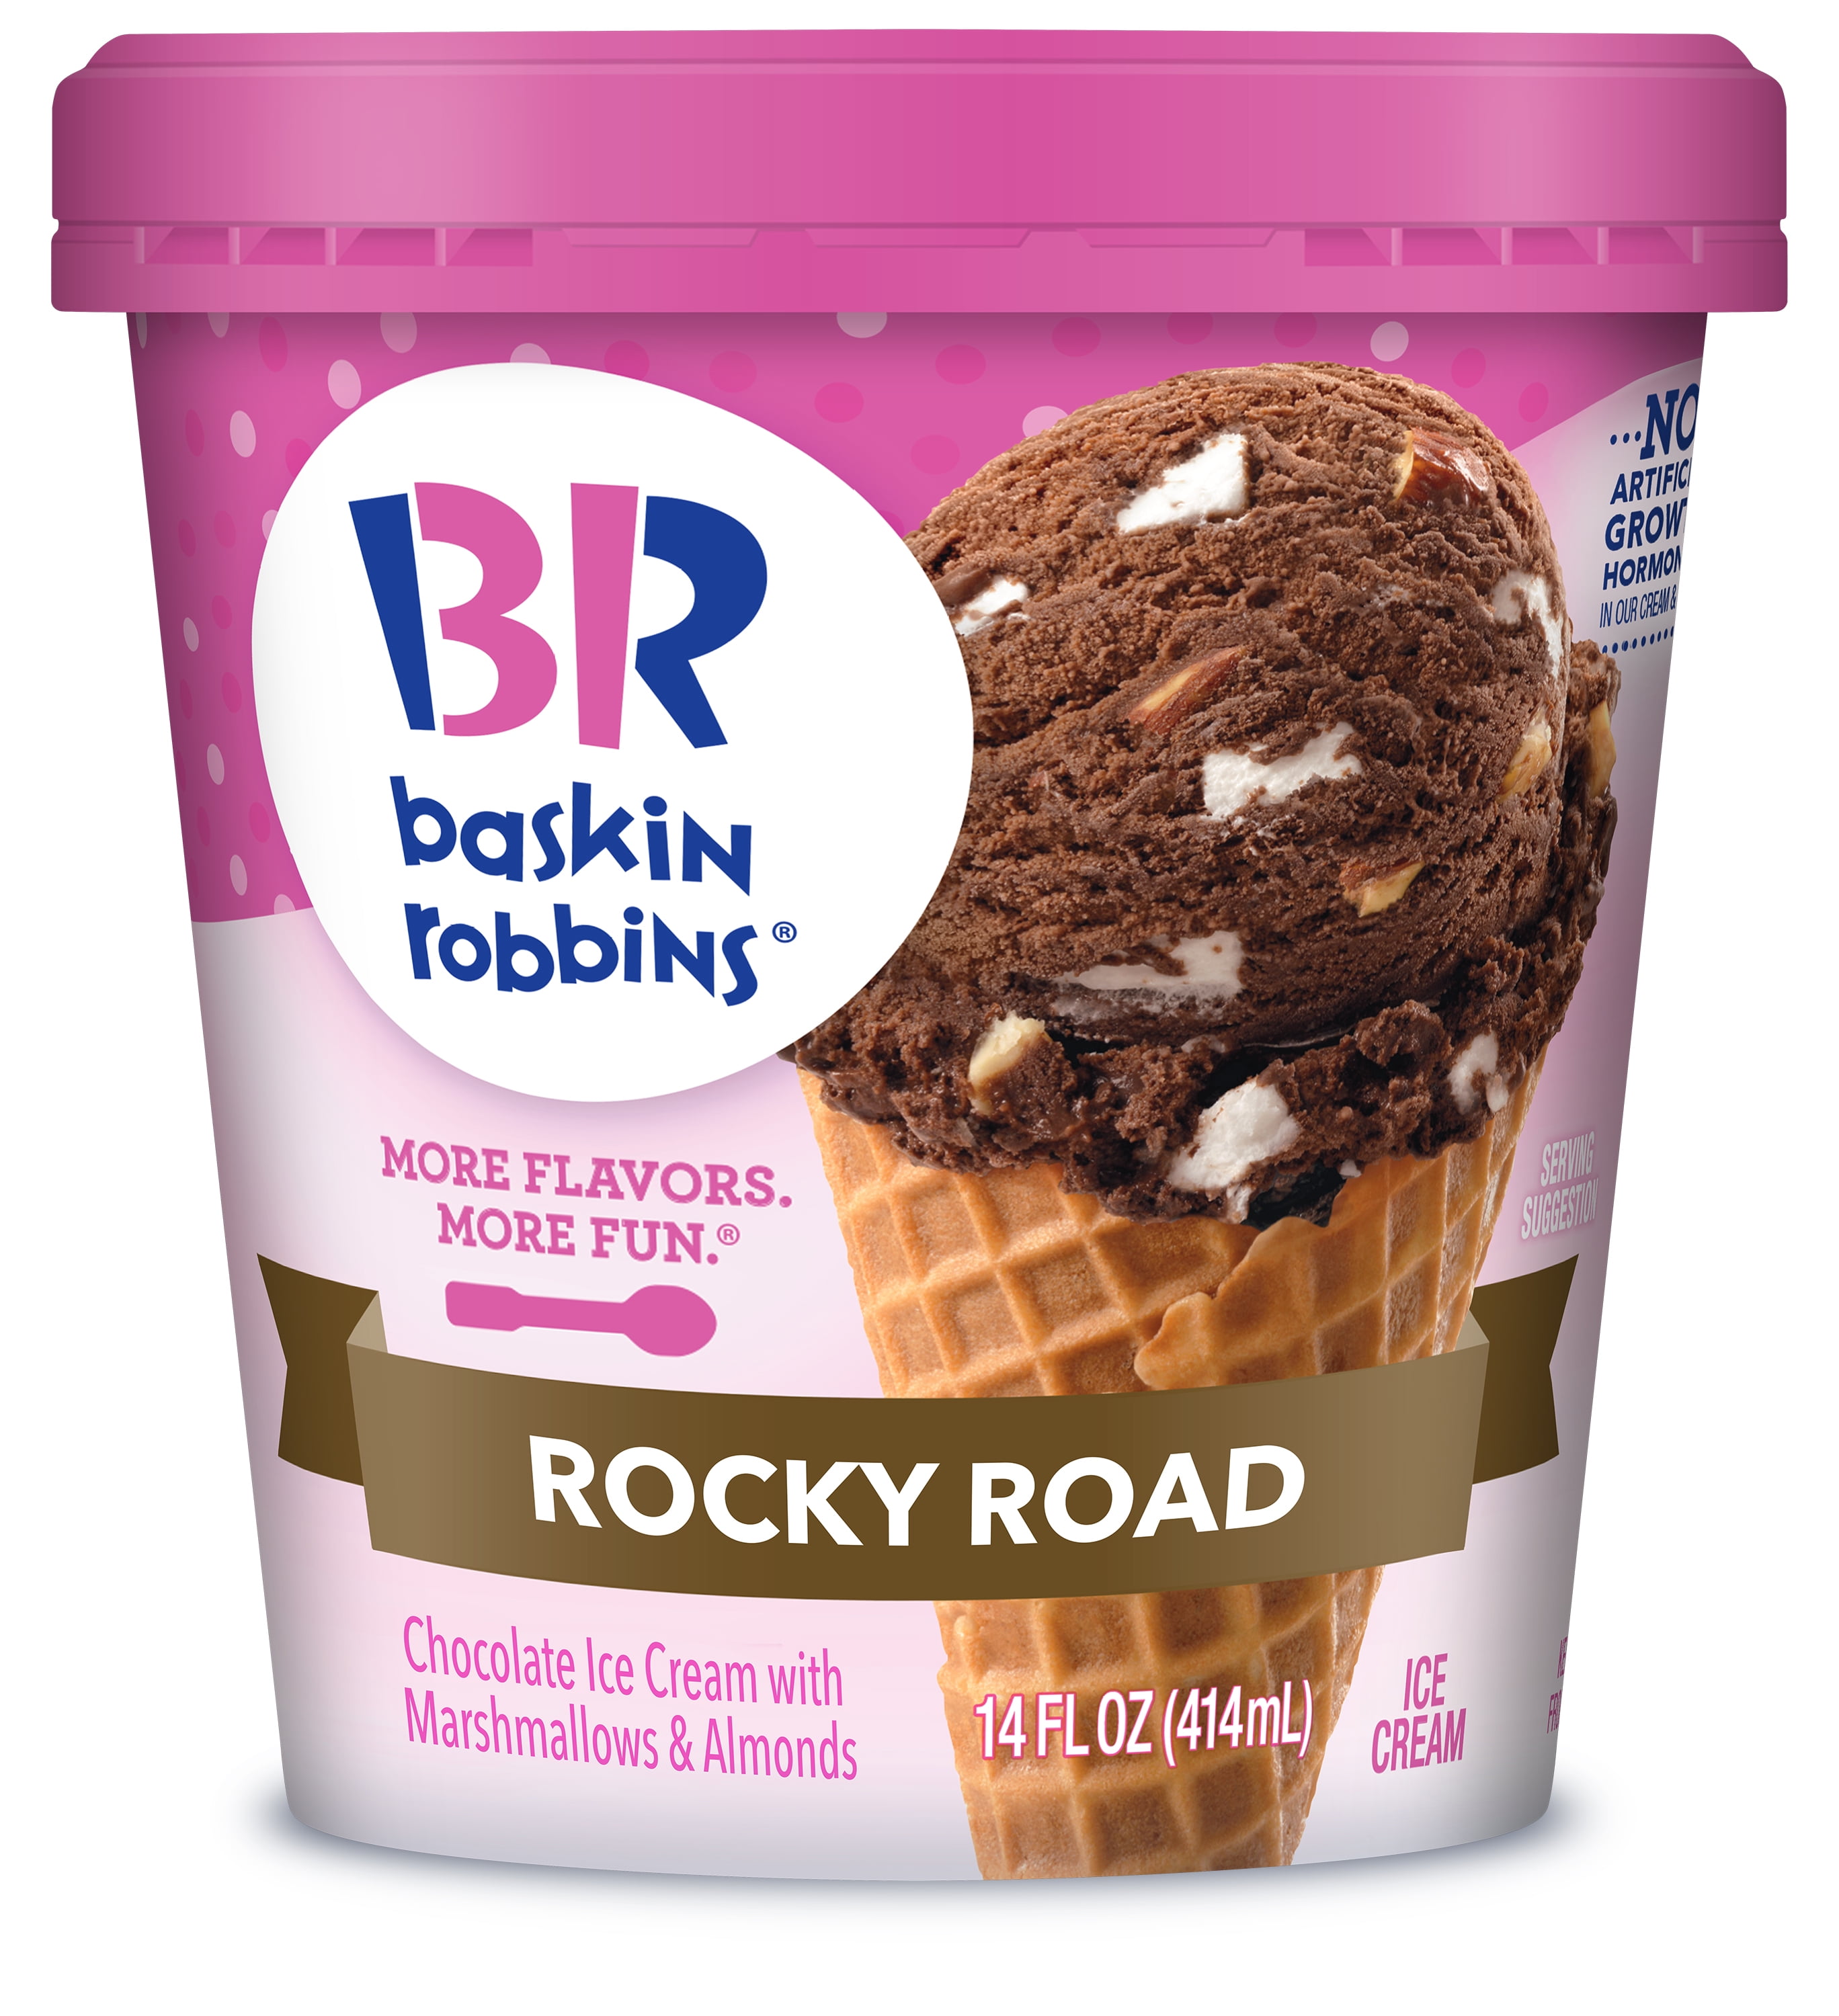 Baskin Robbins Rocky Road Ice Cream 14 Fl Oz C4e02a4d 9fdc 44a4 Bb9e 98e21a076943.787f9359072cff1da4e8764a7356658a 